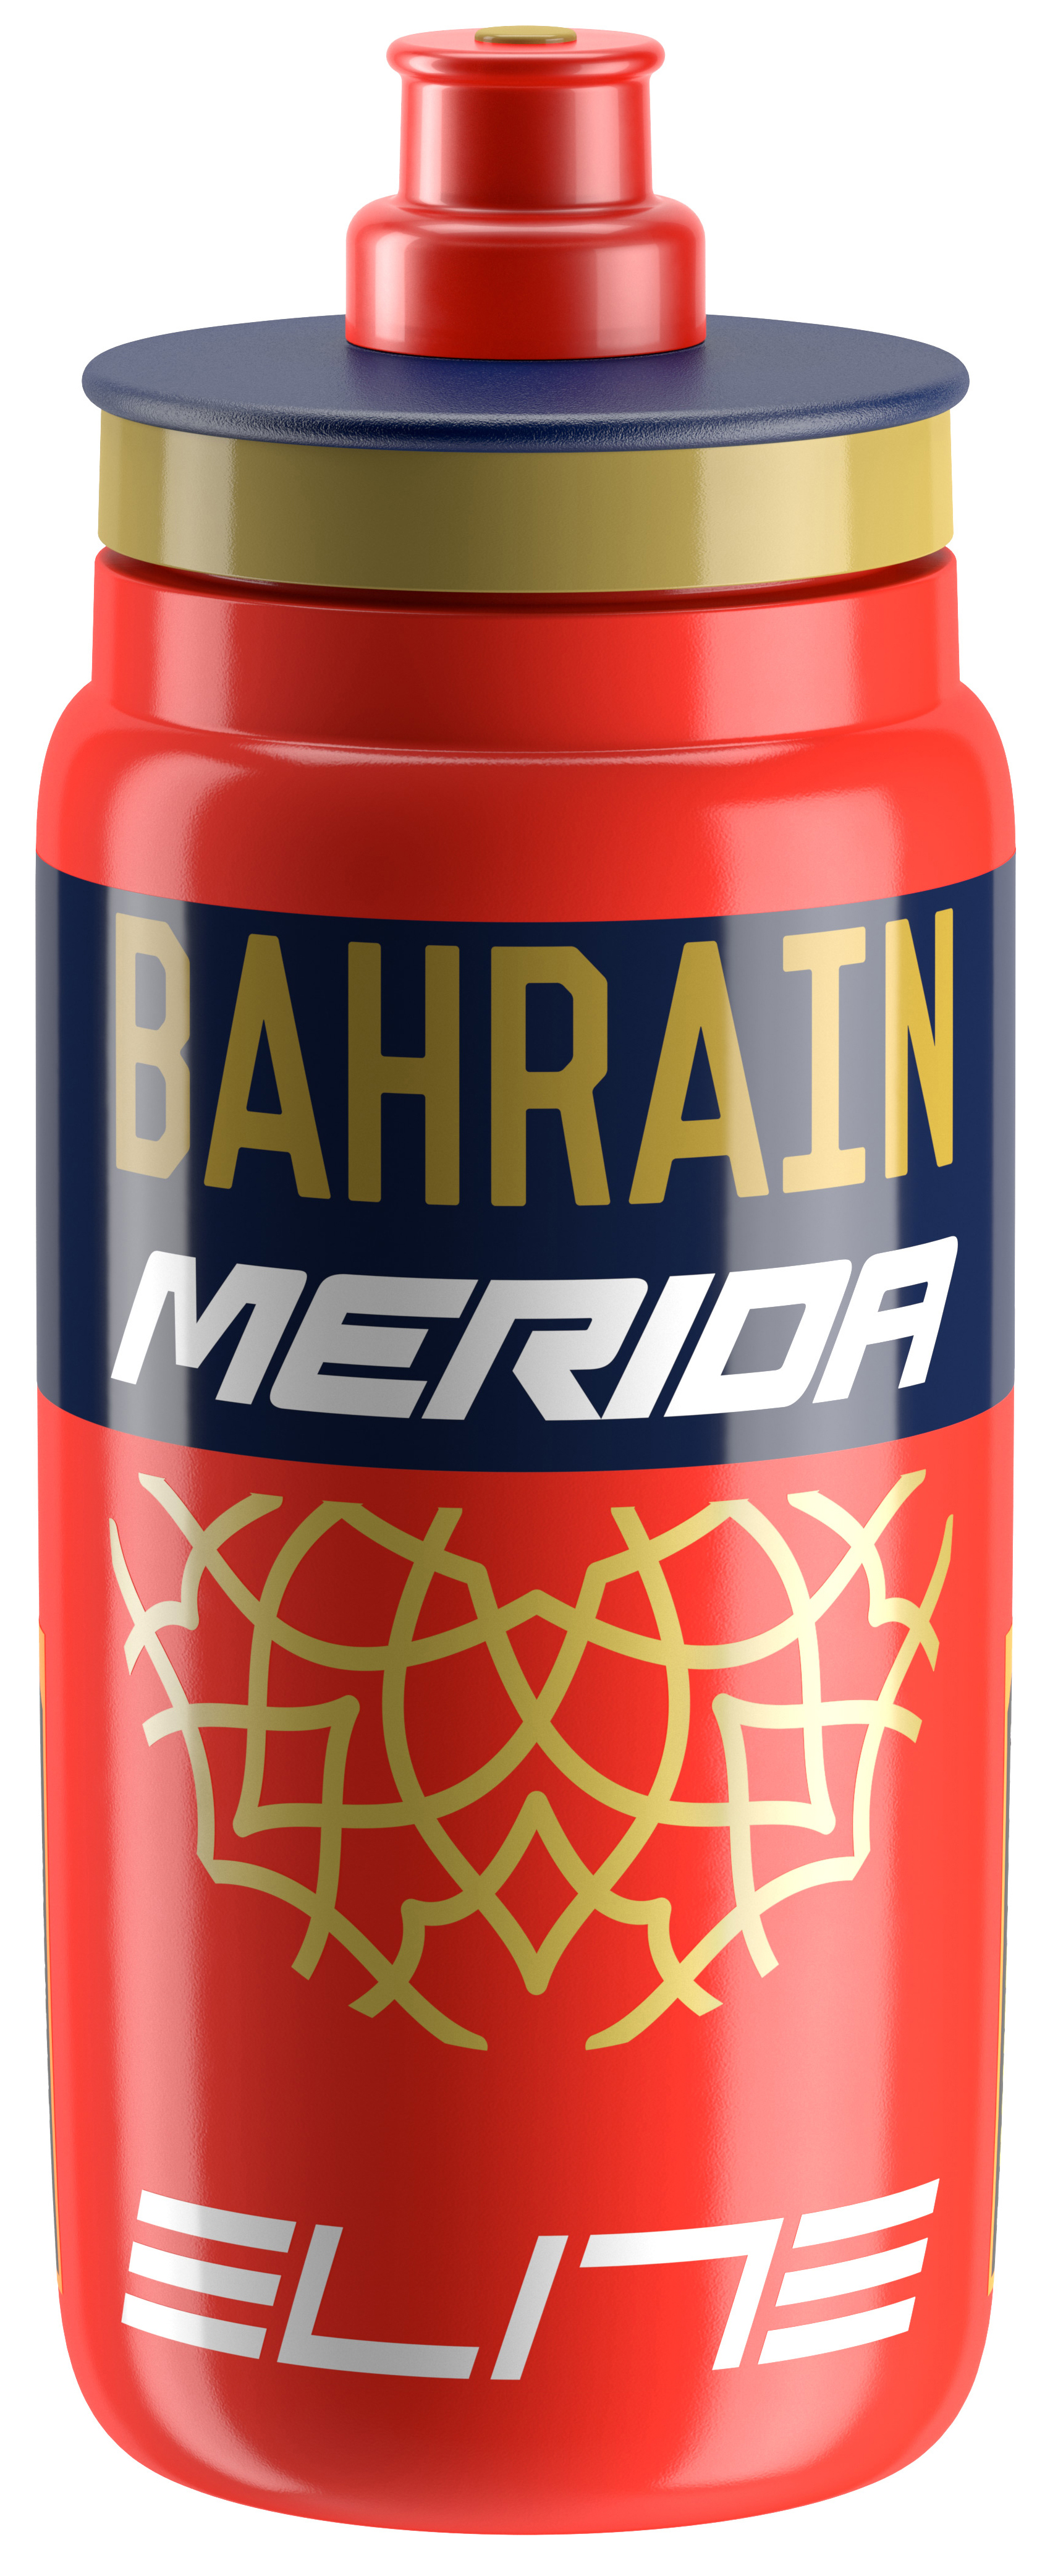  Фляга для велосипеда Elite Fly Bahrein-MERIDA